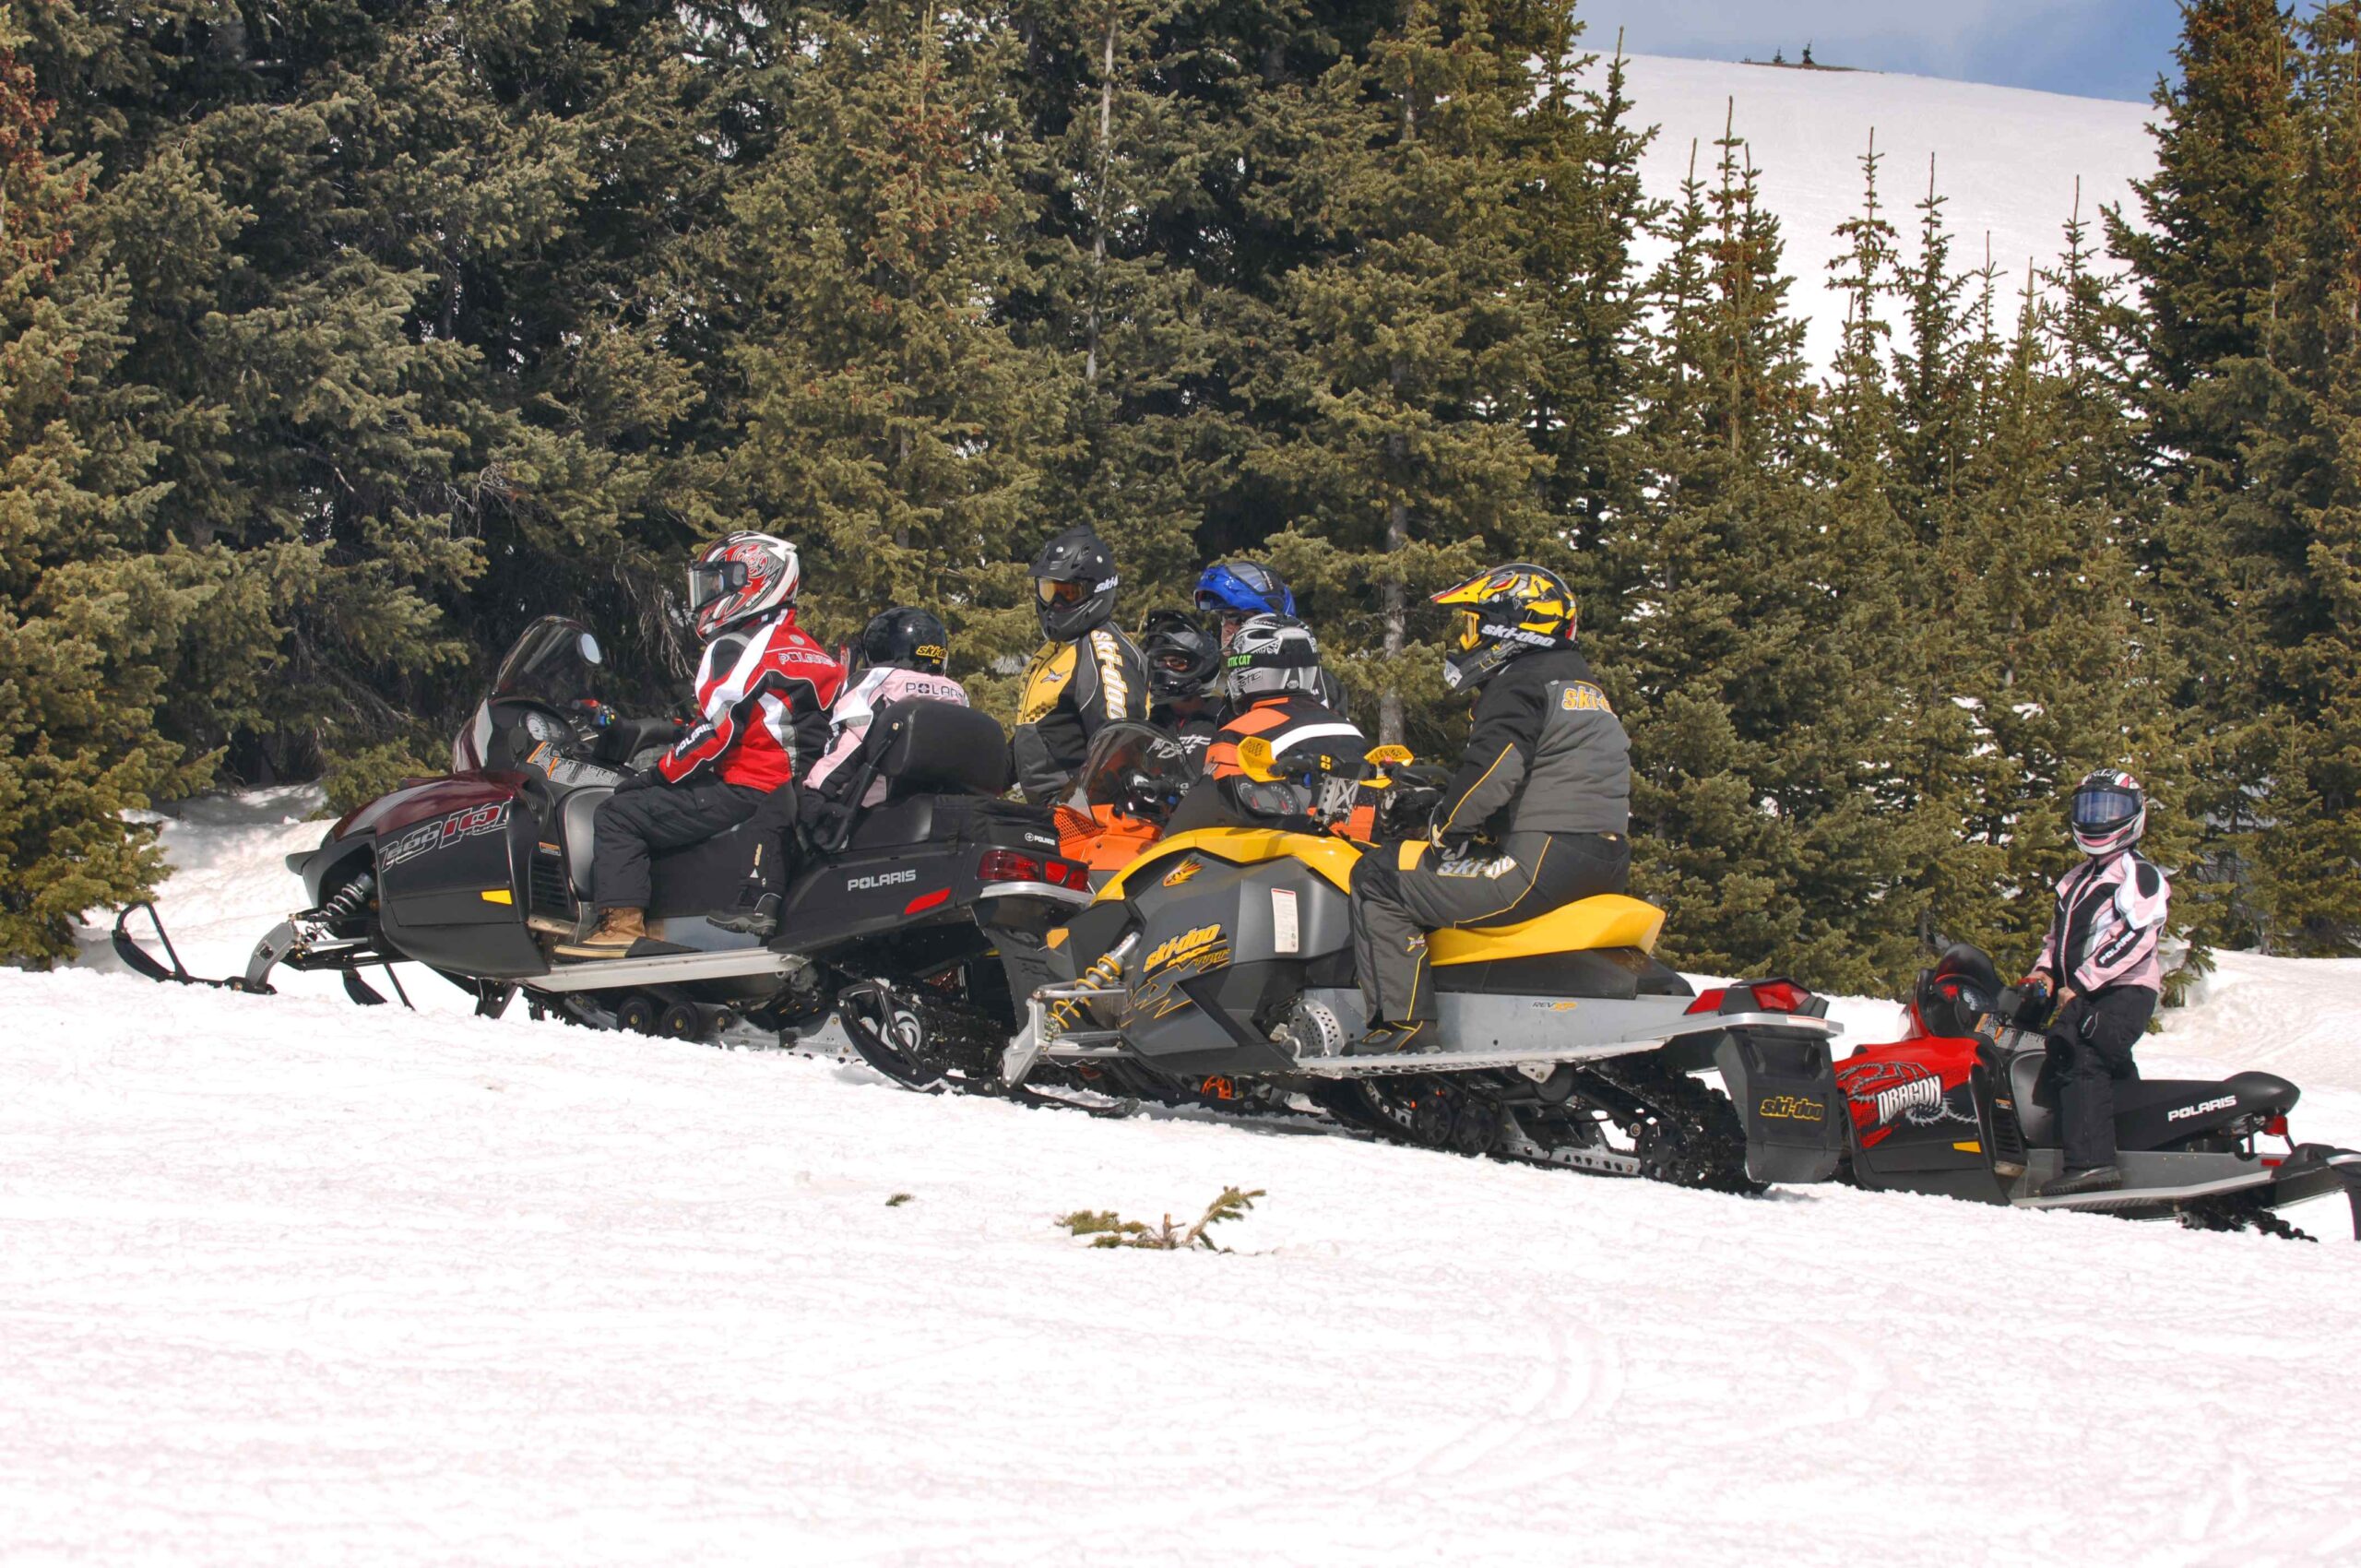 Group of riders enjoying their snowmobile Ontario experience.